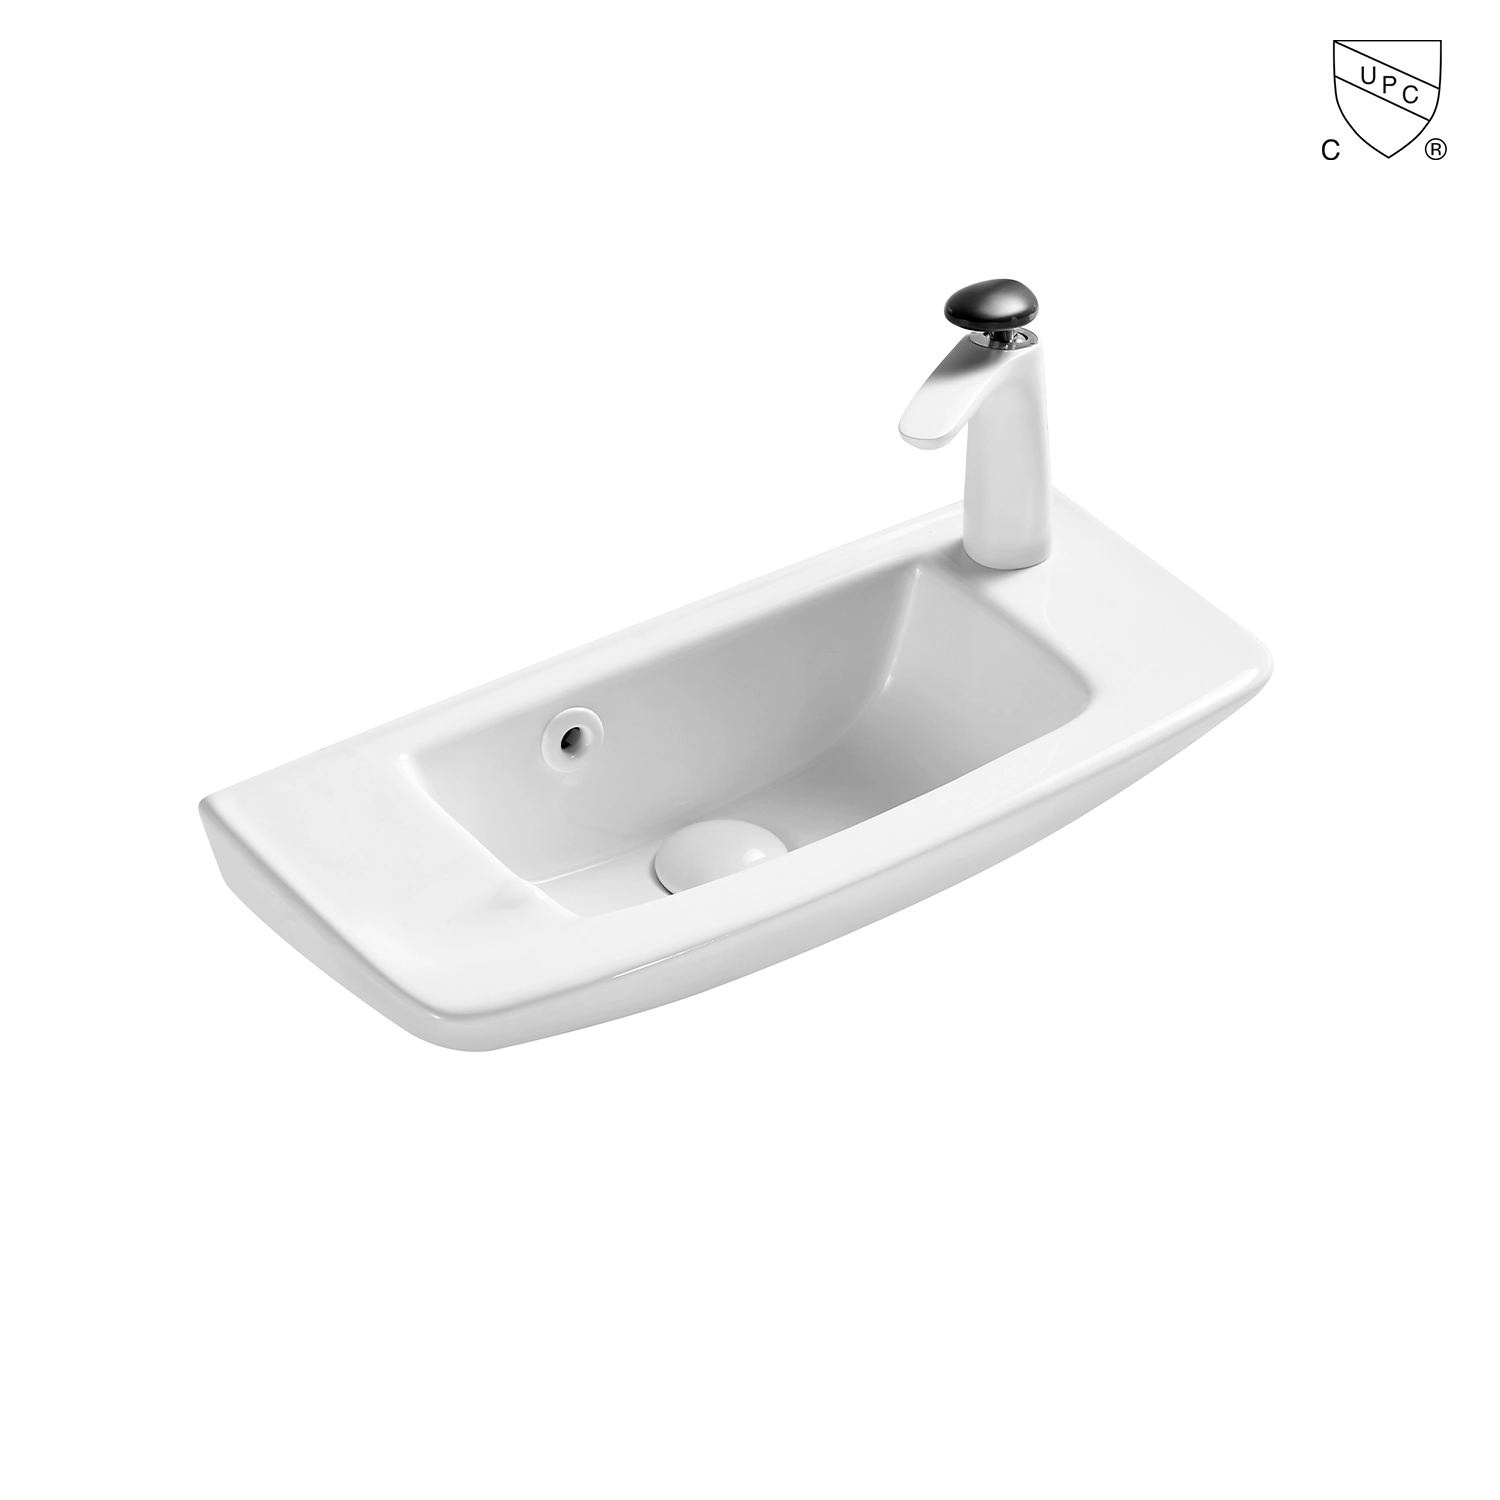 50cm cupc compact bathroom wash basin white rectangle shape wall mount sink ML-2039, 20-inch ada wall mounted sink